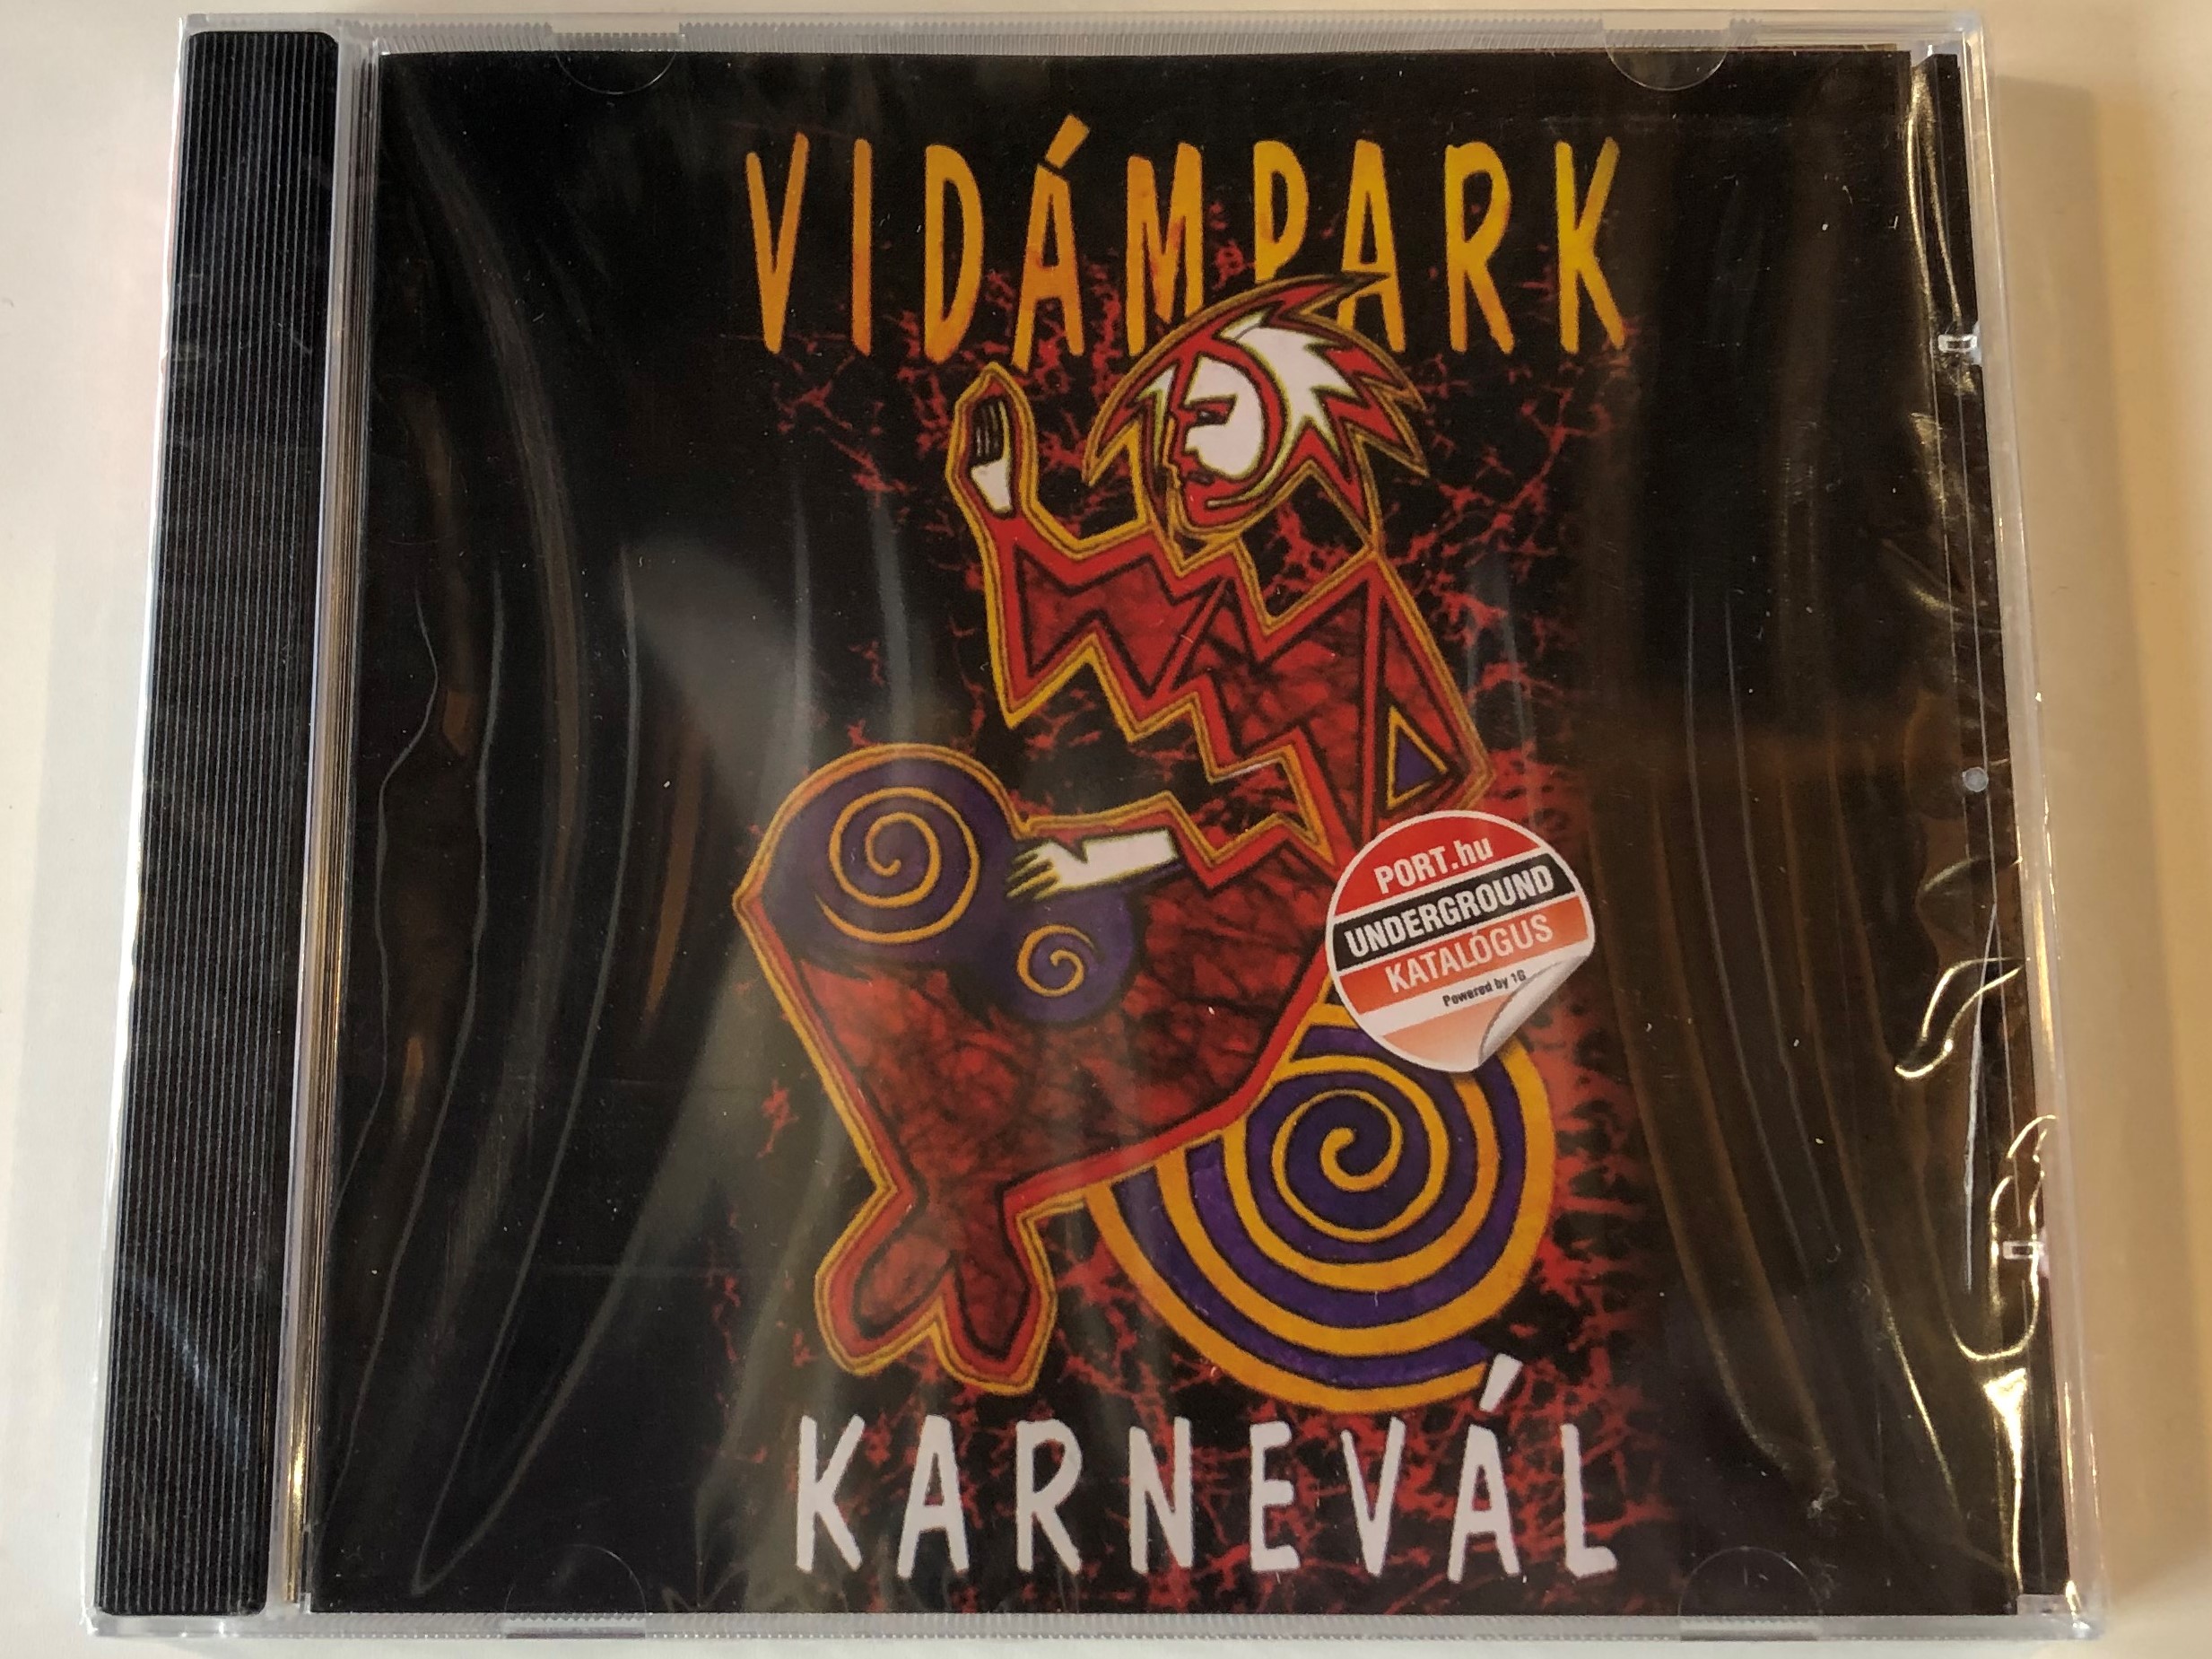 vid-mpark-karnev-l-port.hu-underground-katal-gus-1g-records-audio-cd-2009-1g2009103003-2-1-.jpg